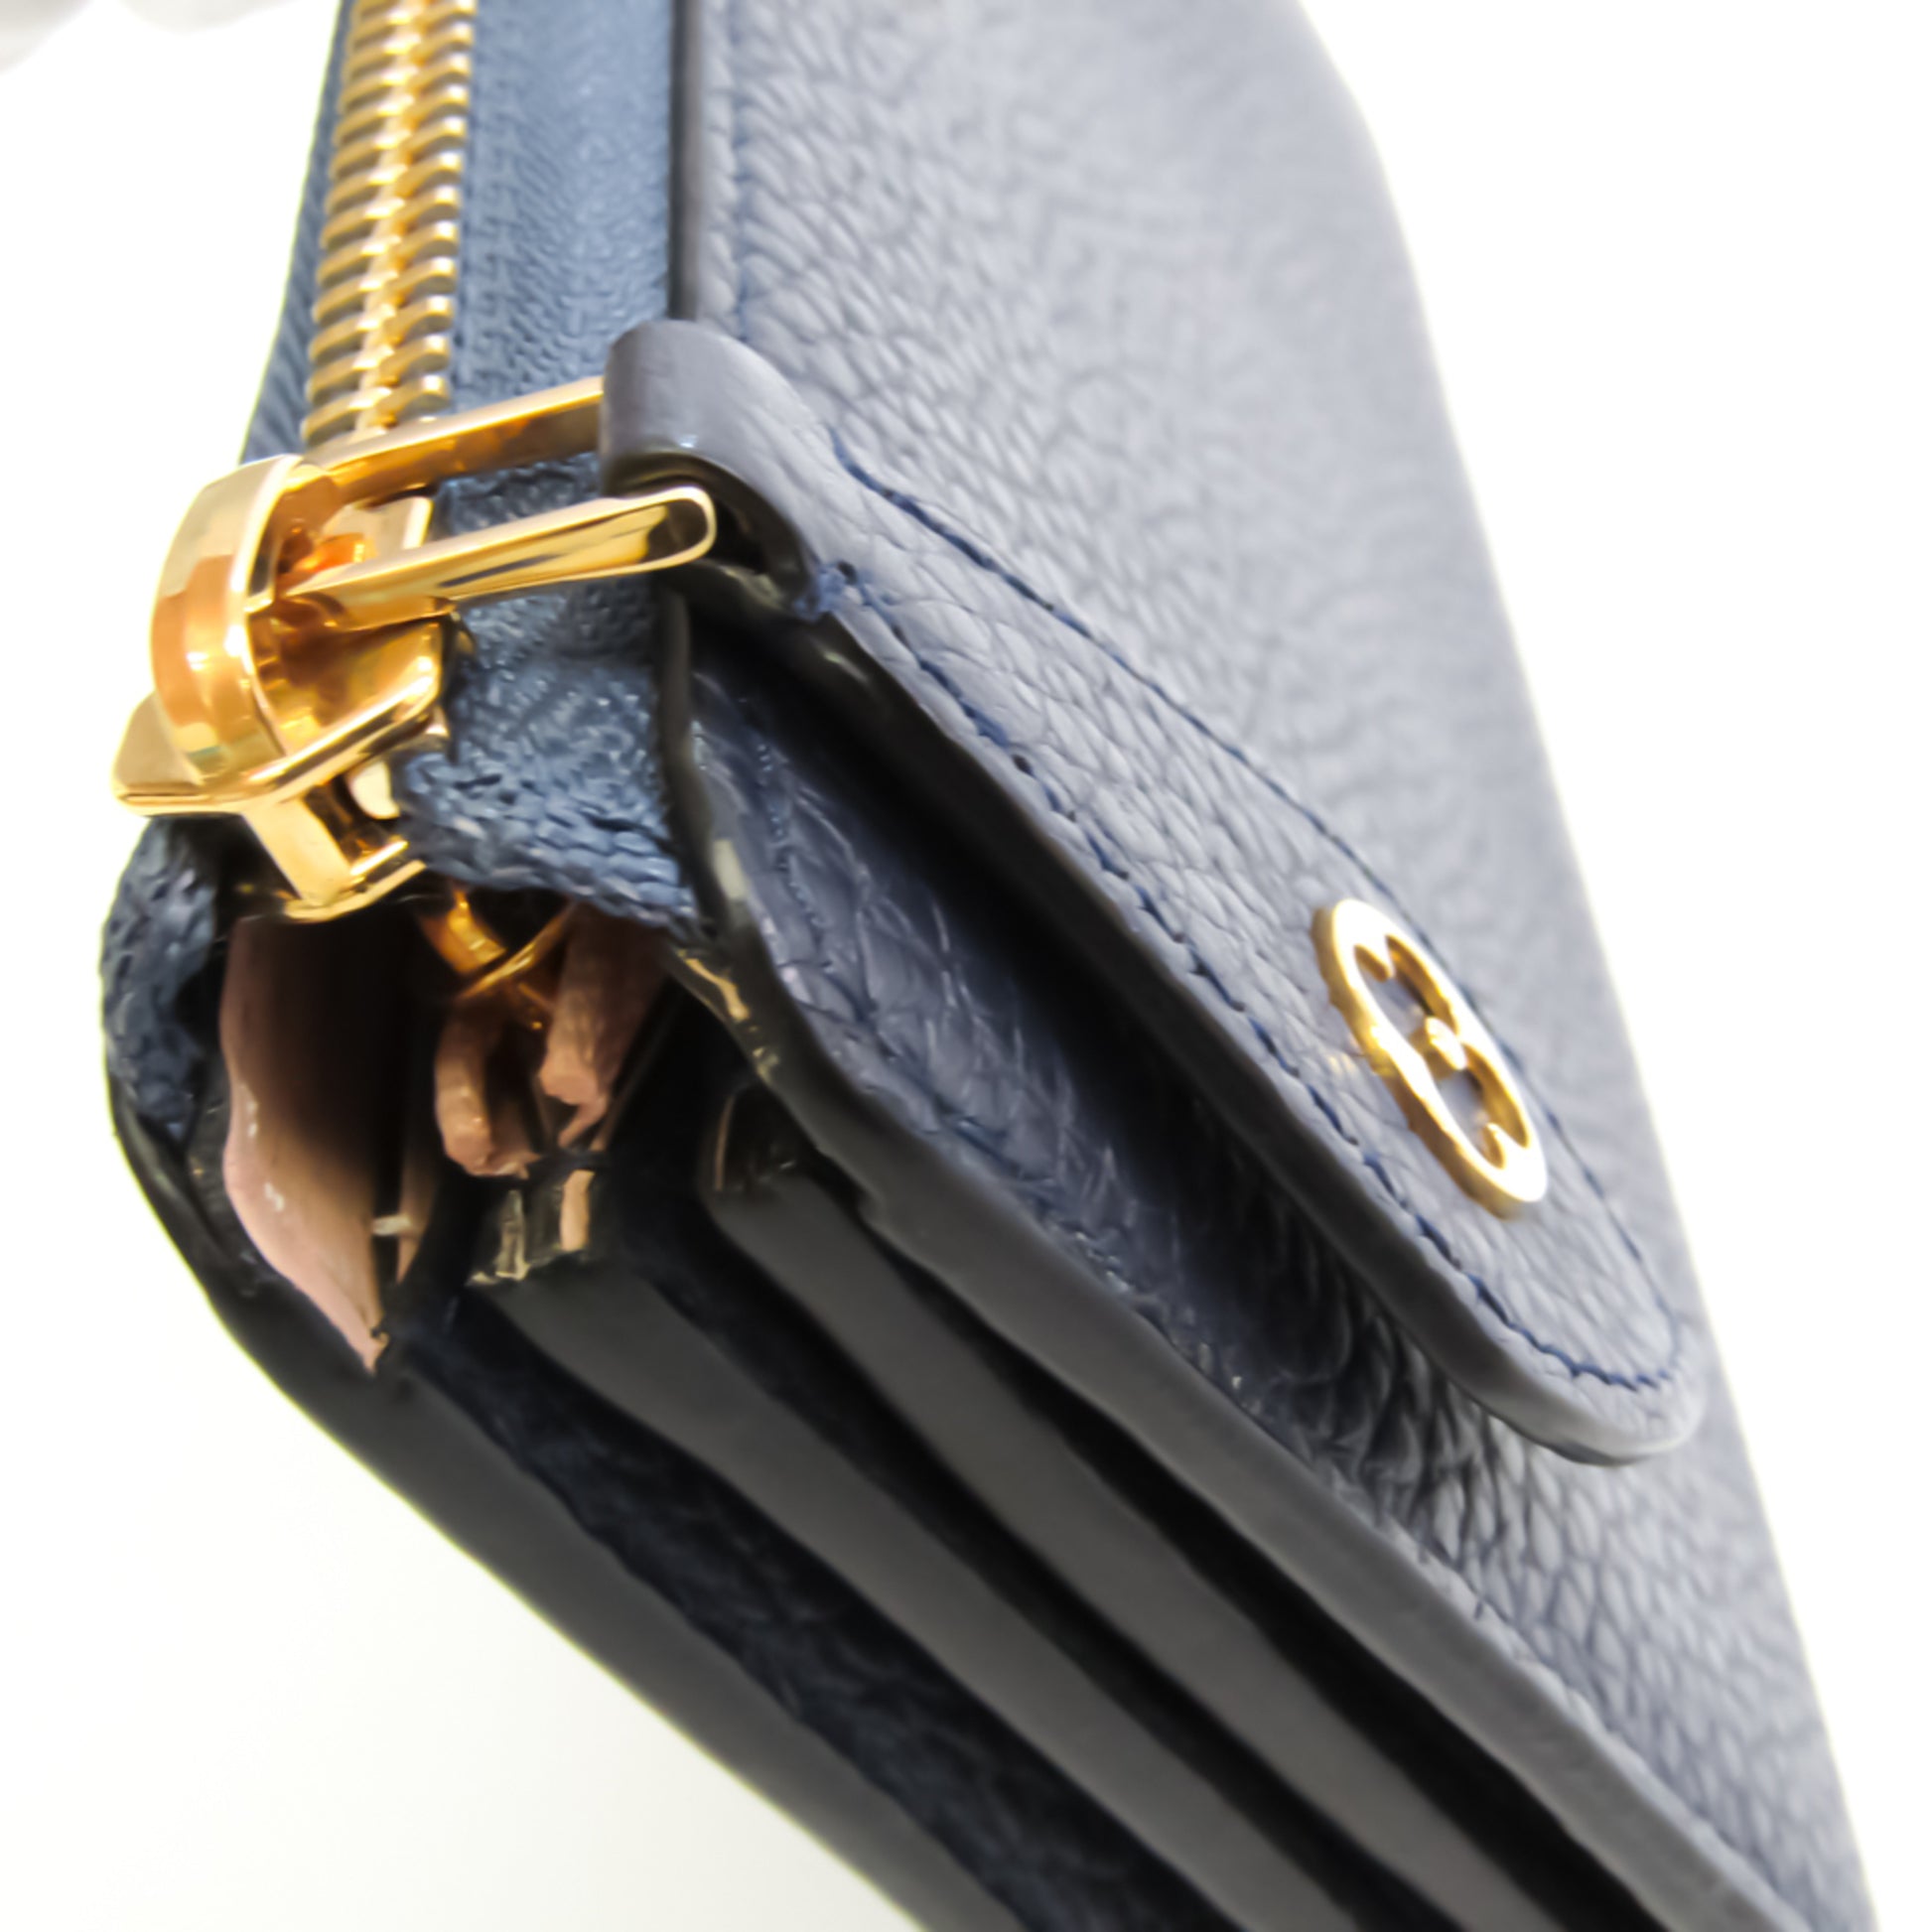 Louis Vuitton Comet Wallet Japan Exclusive M68582 Women's